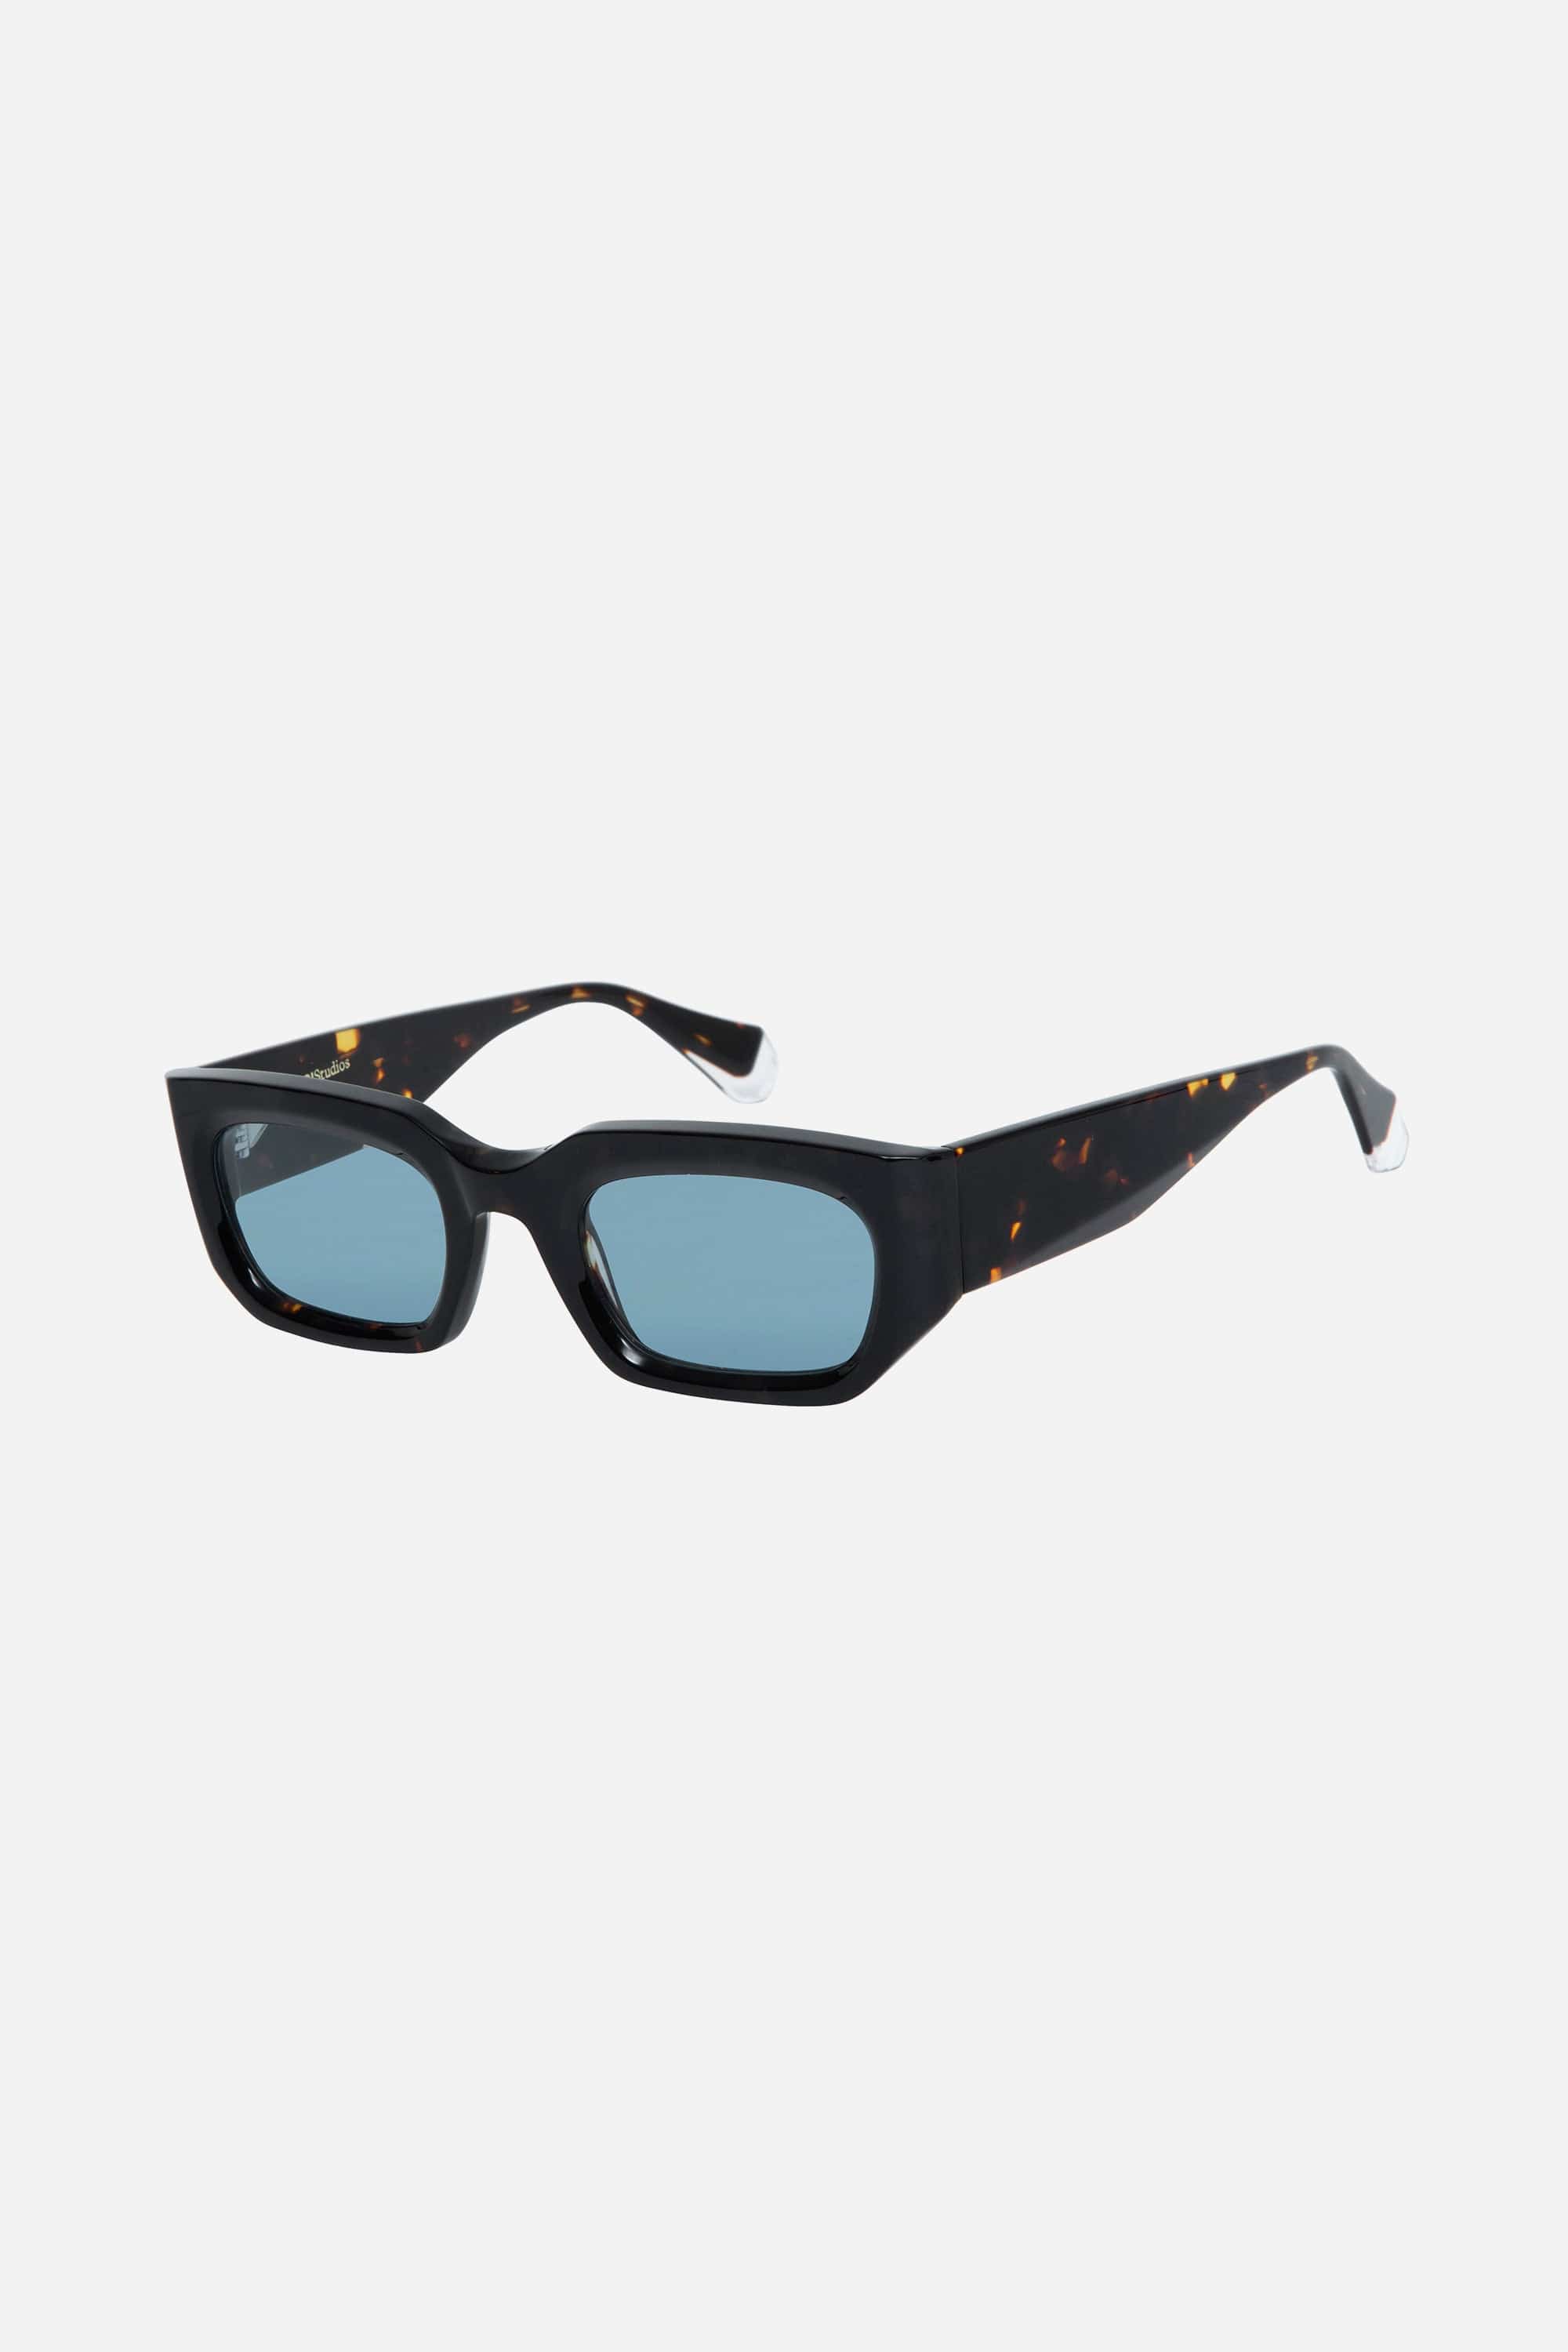 EXCLUSIVE Gigi Studios micro havana sunglasses - Eyewear Club